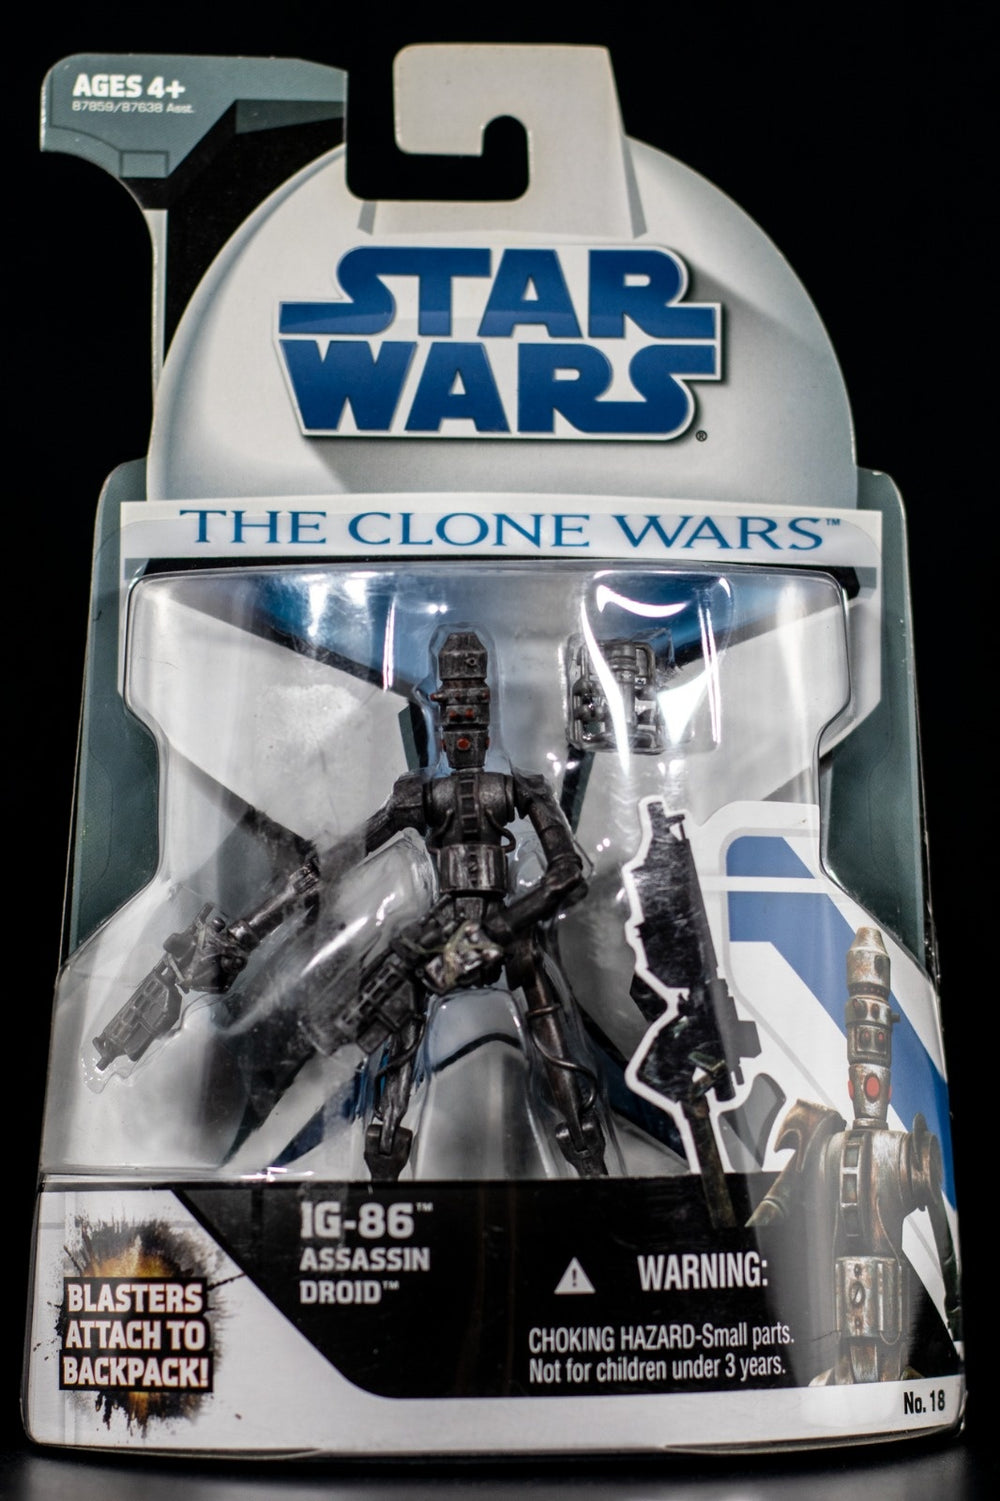 Star Wars: The Clone Wars "IG-86 Assassin Droid"